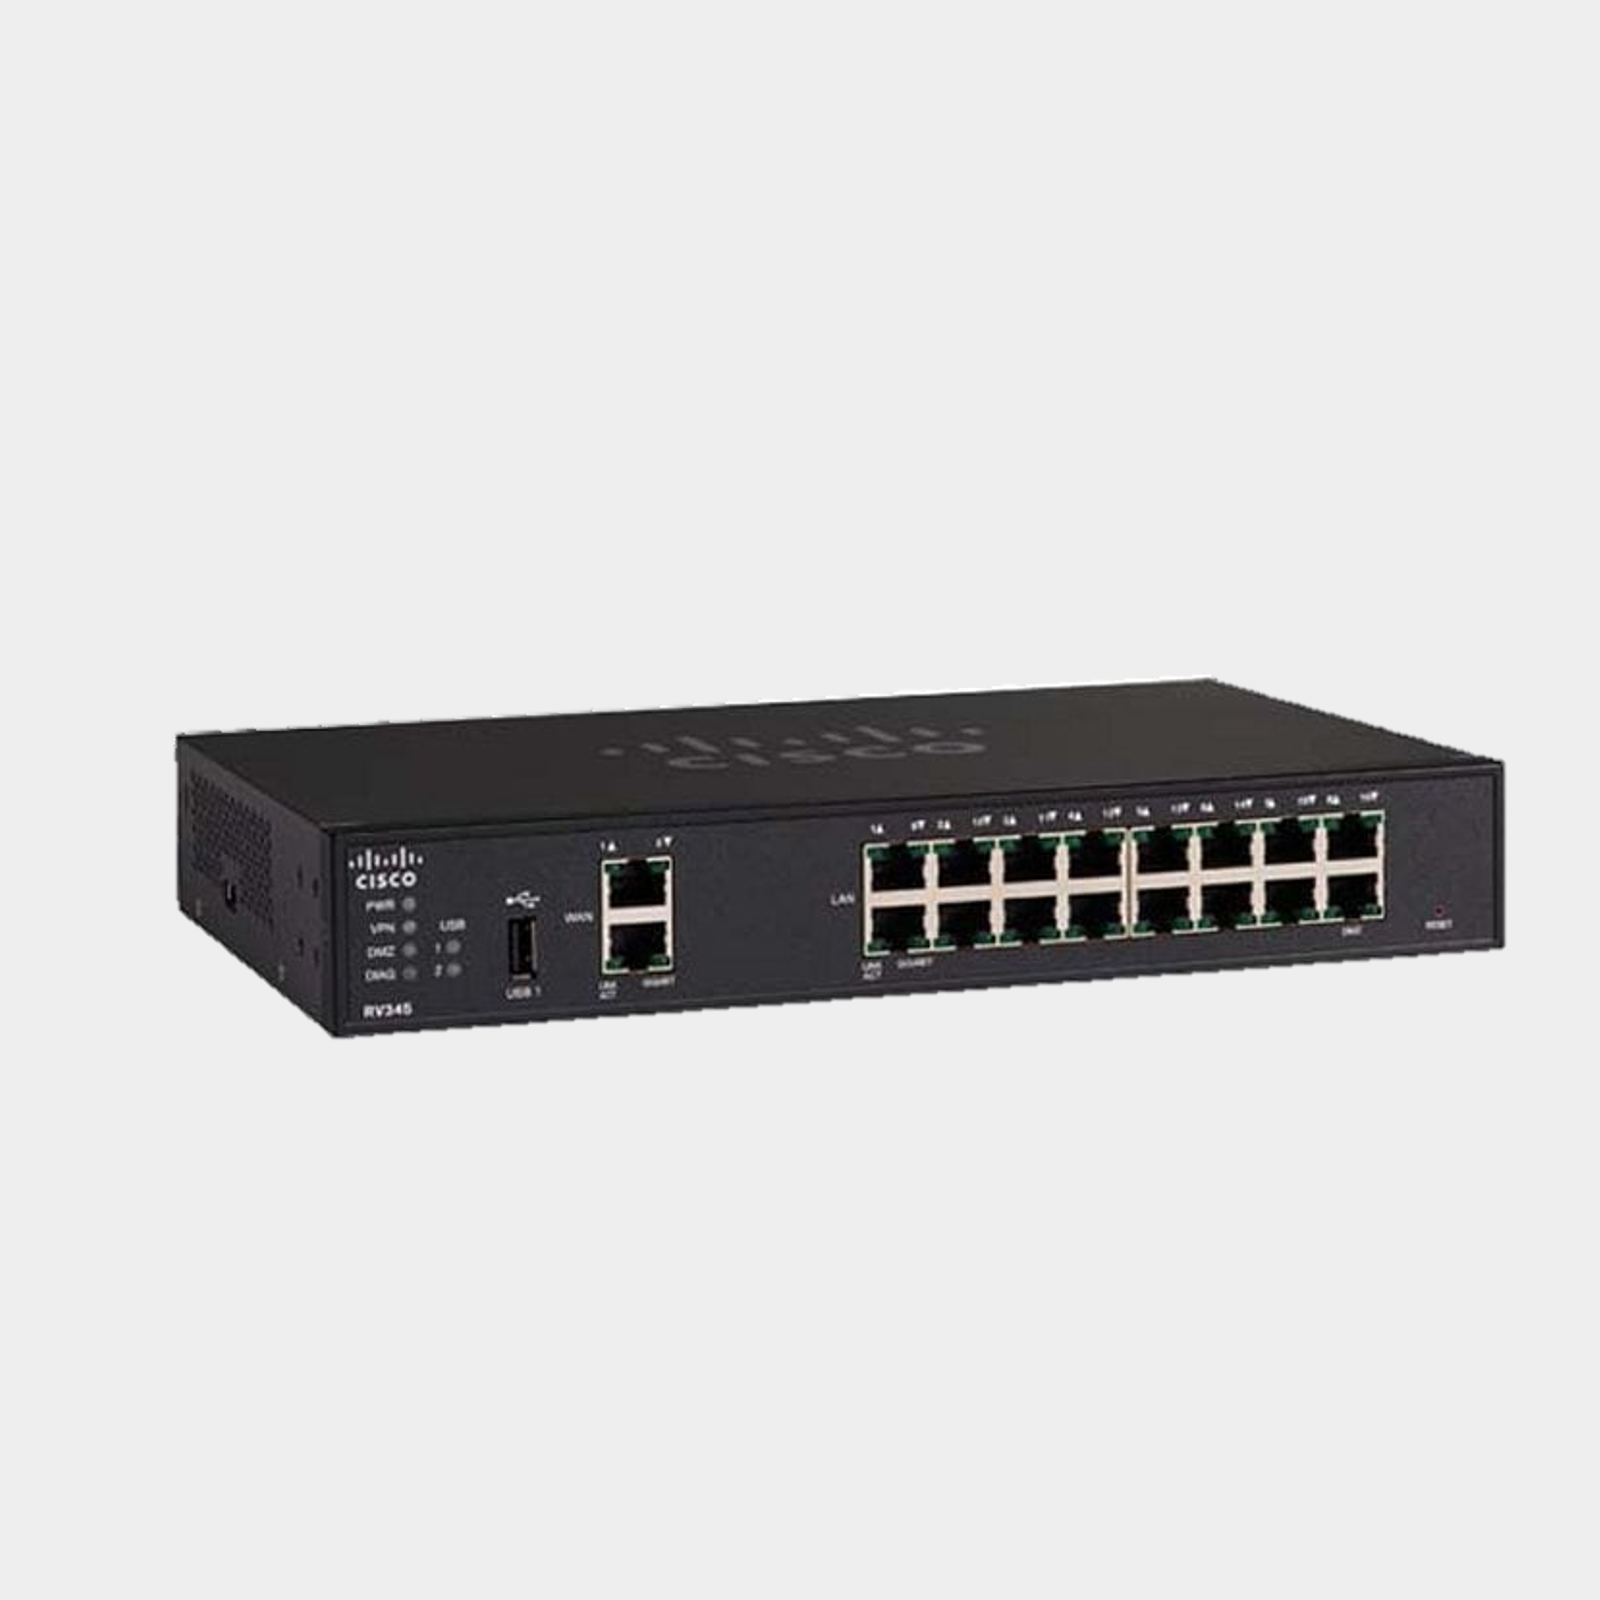 CISCO RV345 Dual WAN Gigabit VPN Router / Firewall (RV345-K9-G5)